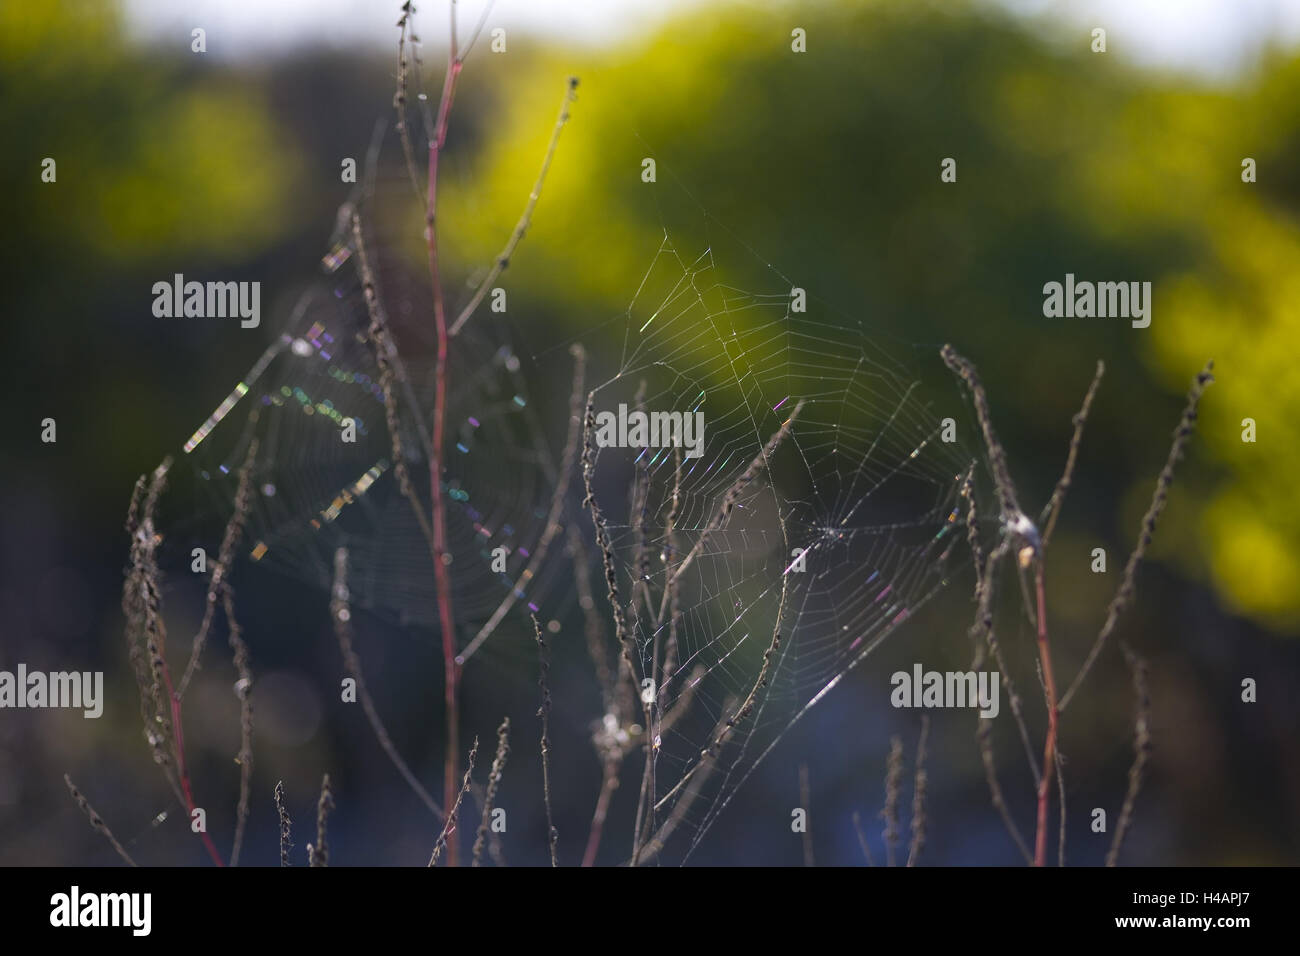 Spinning network between autumn shrubs, Stock Photo